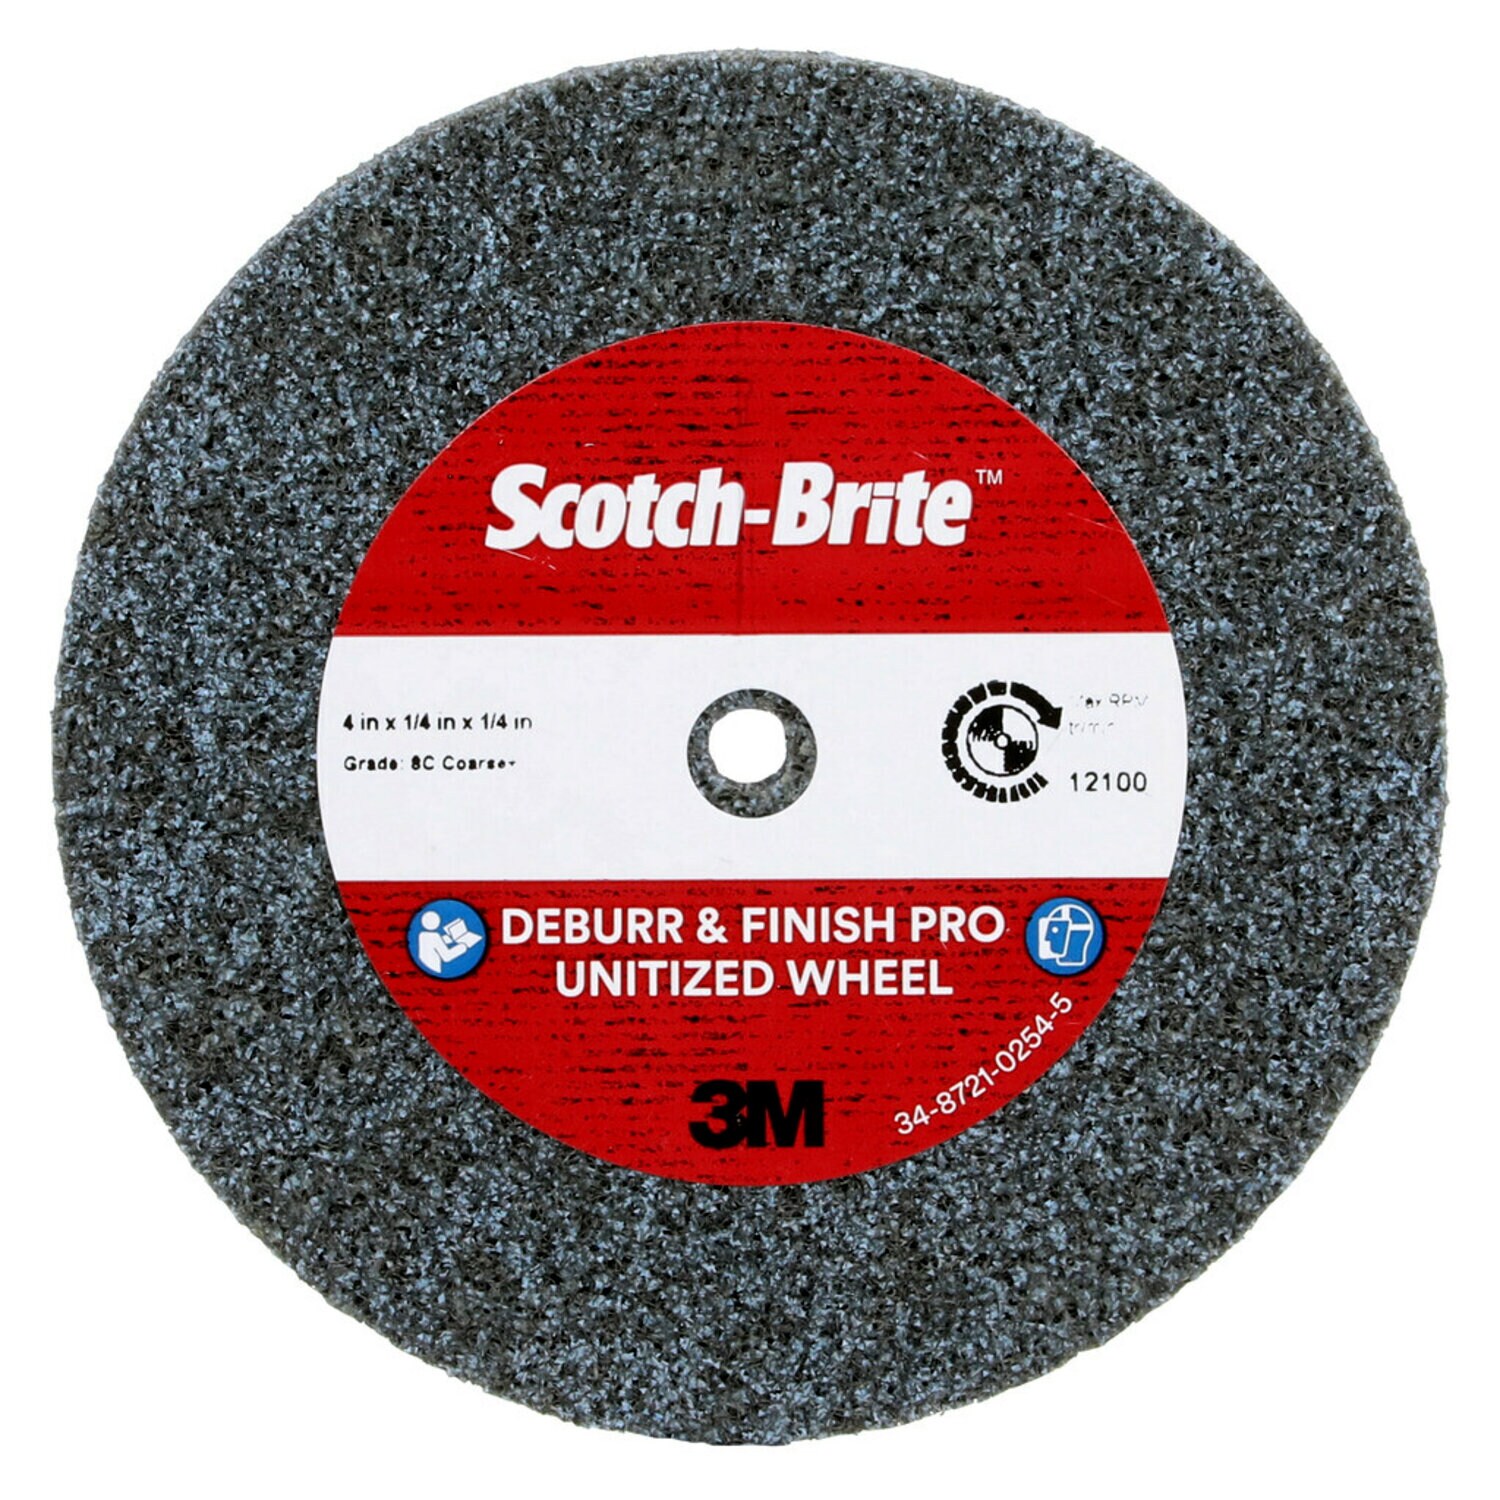 7100220639 - Scotch-Brite Deburr & Finish Pro Unitized Wheel, DP-UW, 8C Coarse+, 4
in x 1/4 in x 1/4 in